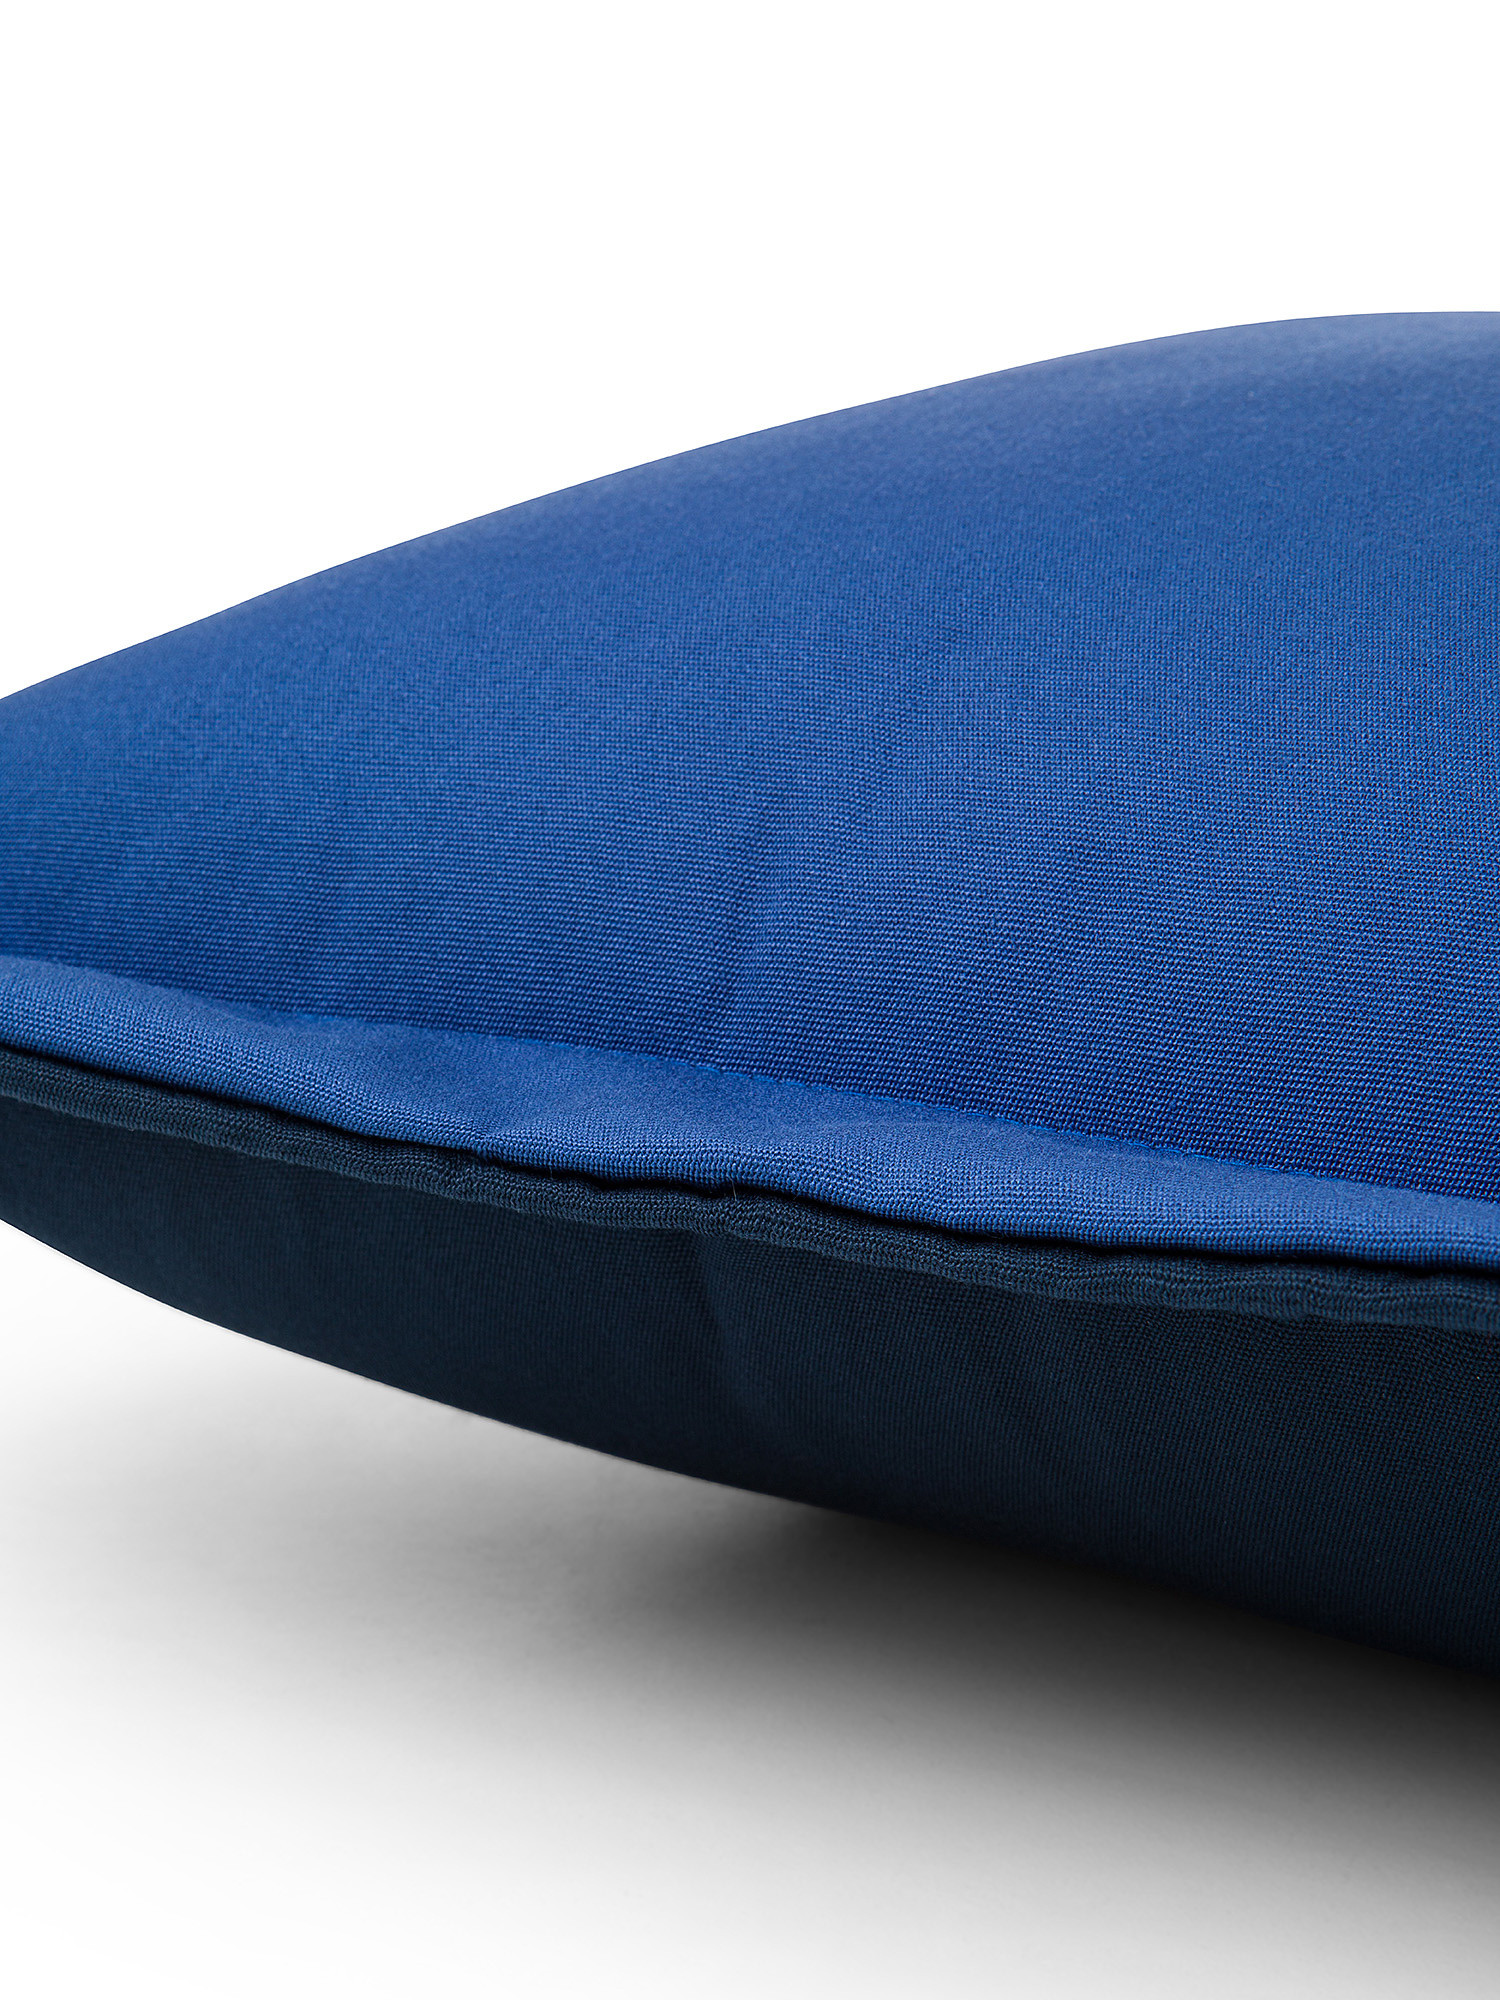 Cuscino da esterno in tessuto double color 45x45cm, Blu, large image number 2